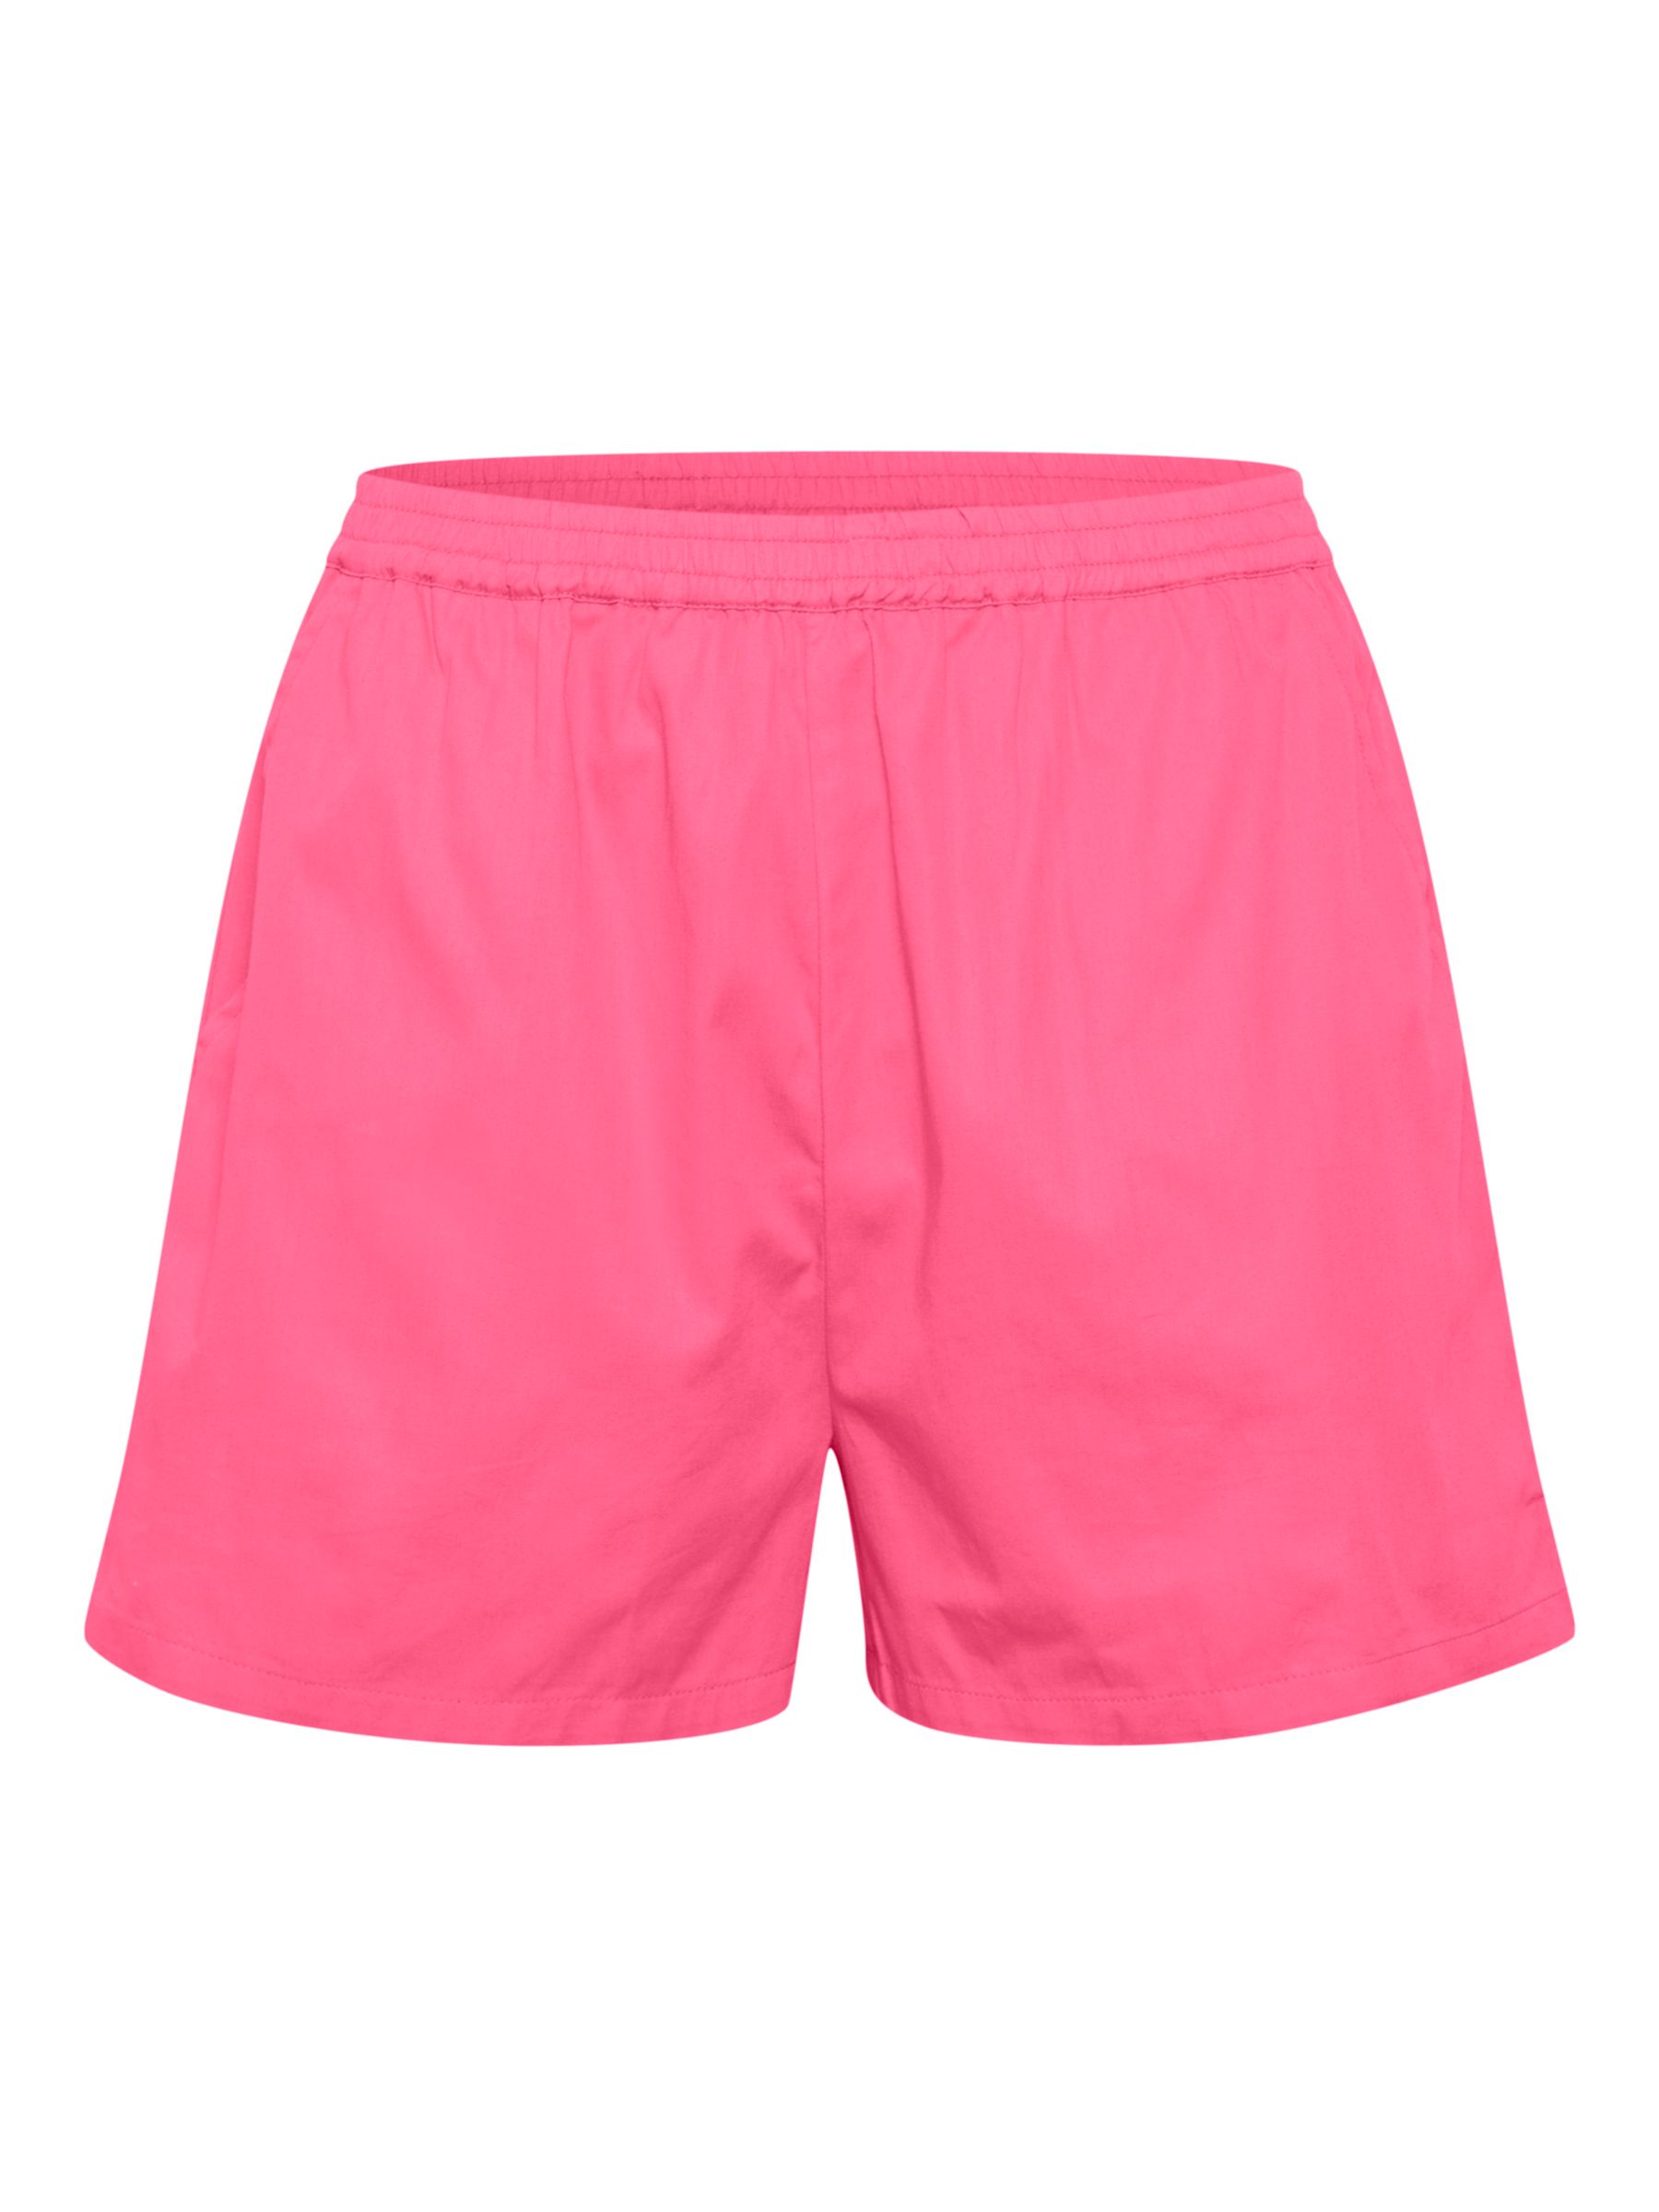 Saint Tropez Uflora Shorts, Fandango Pink at John Lewis & Partners